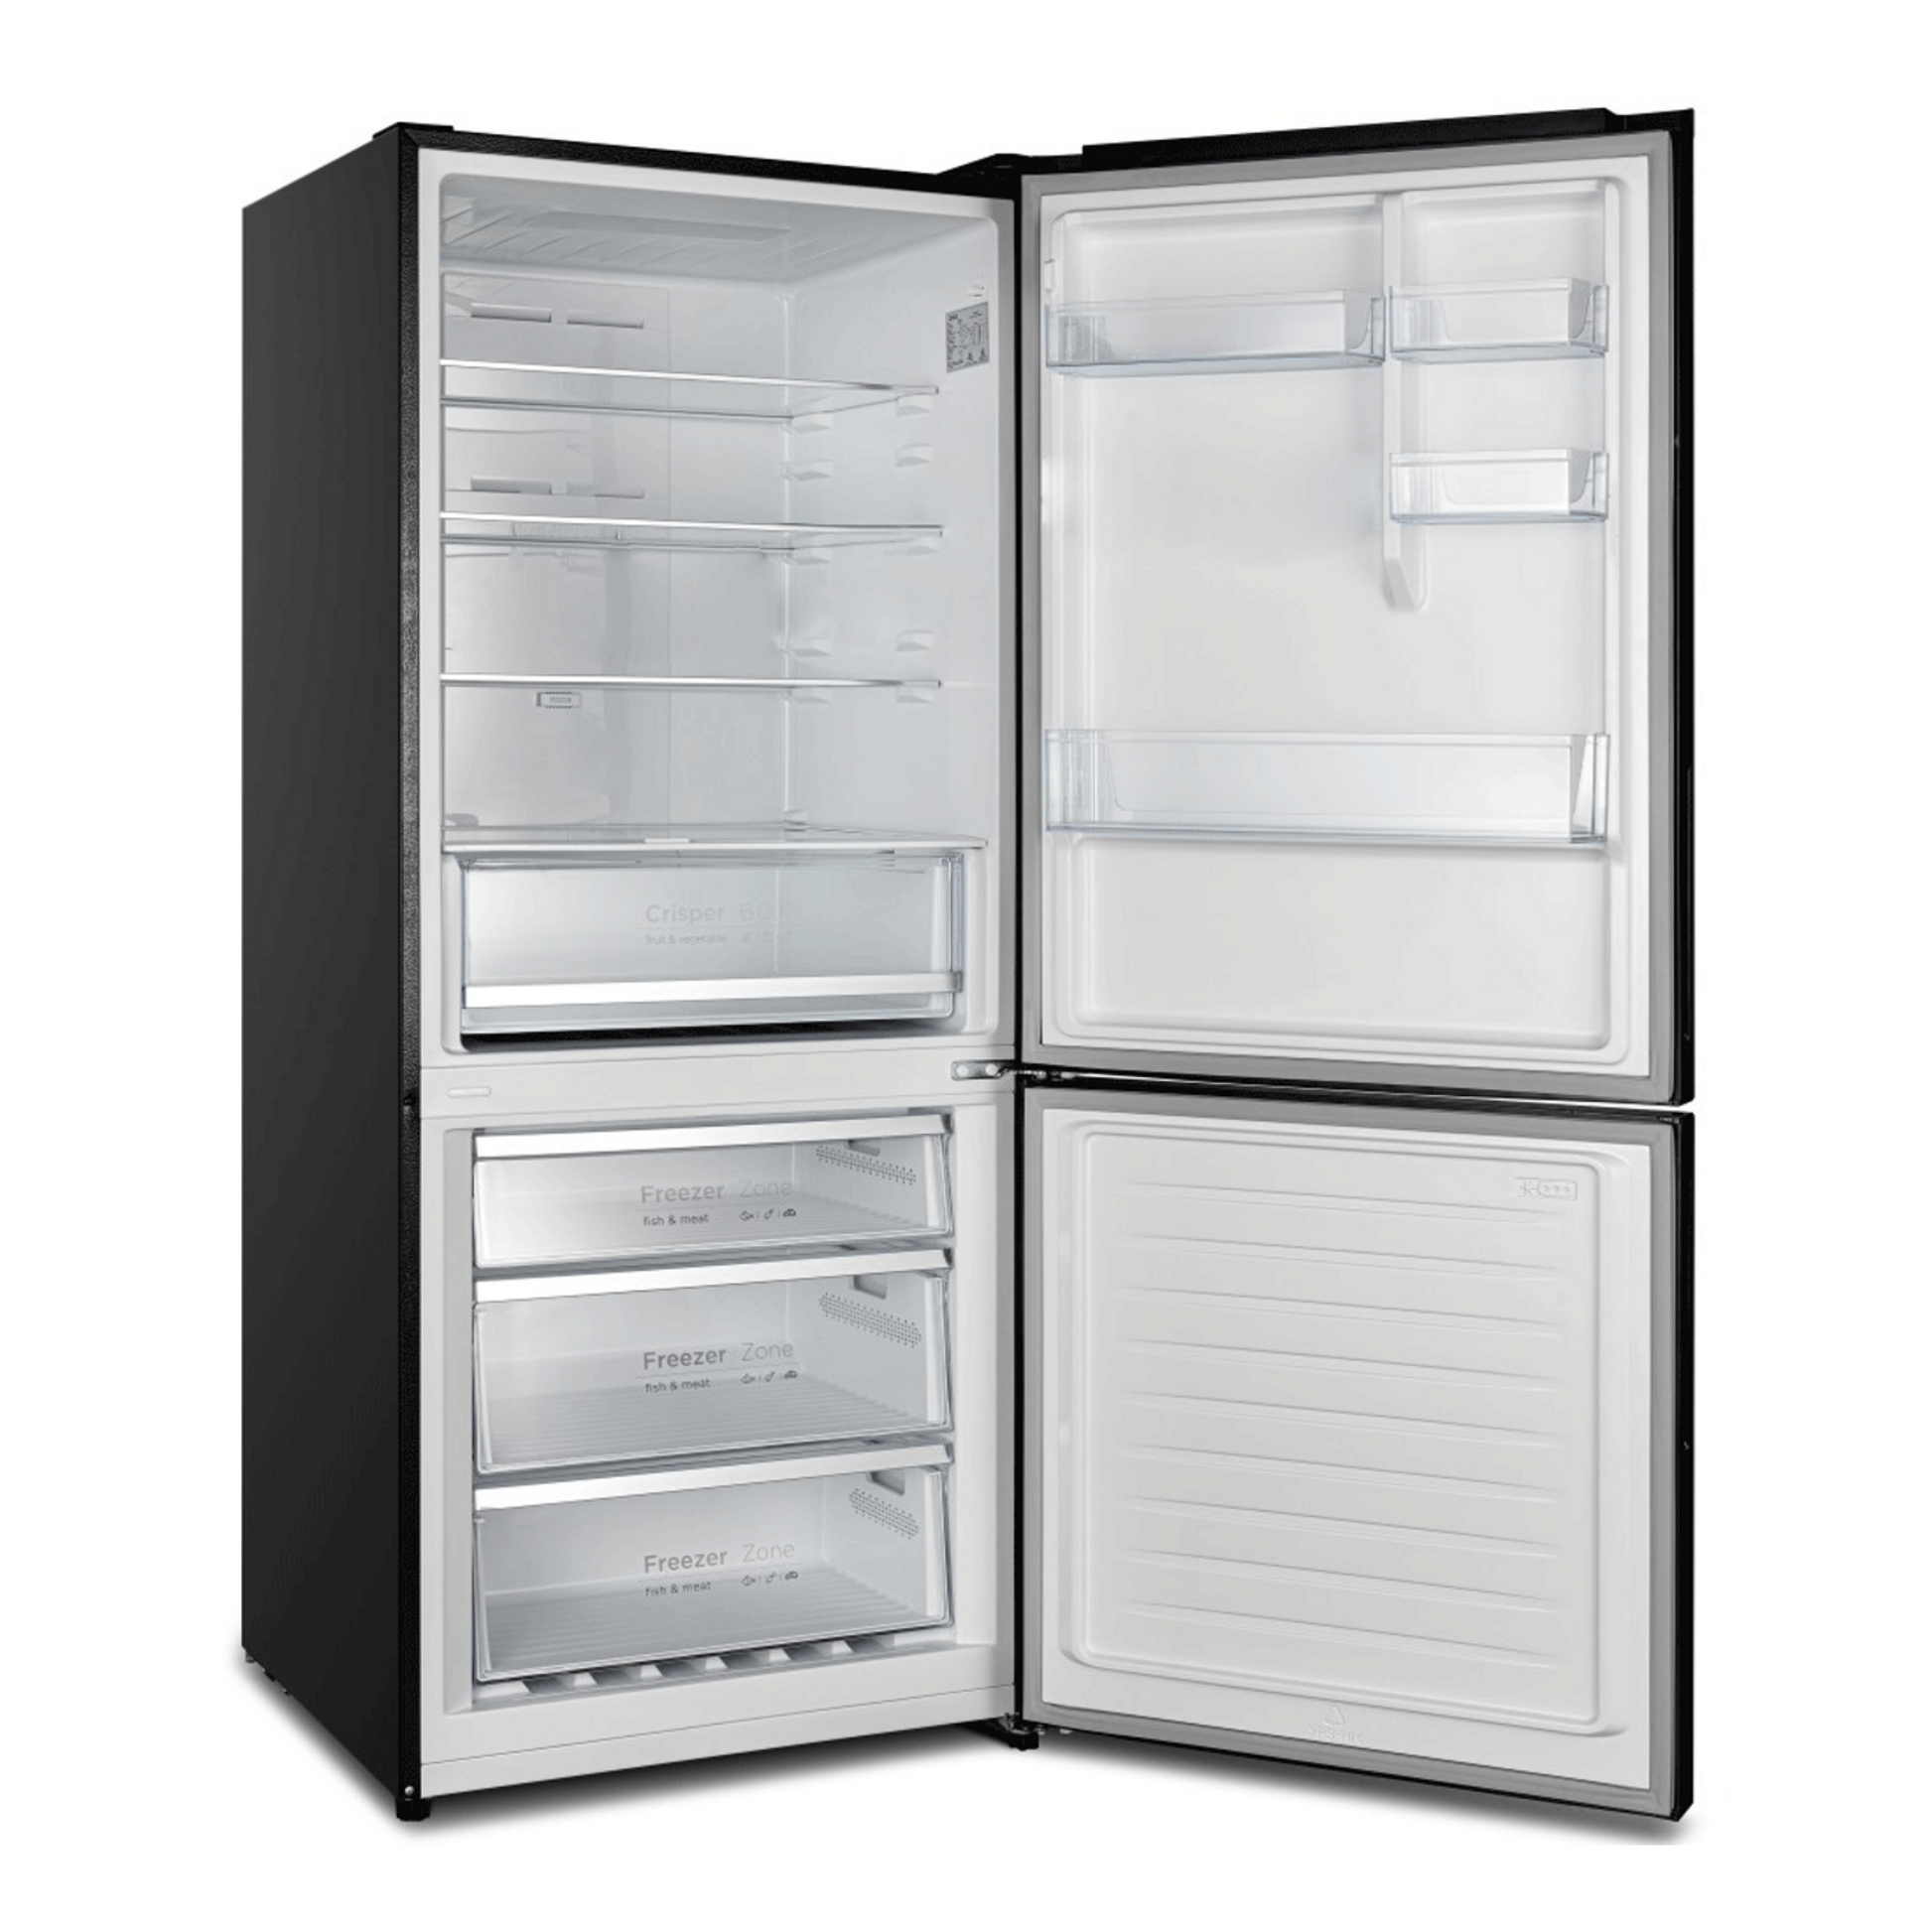 Vogue 432L Frost Free Refrigerator, 352432